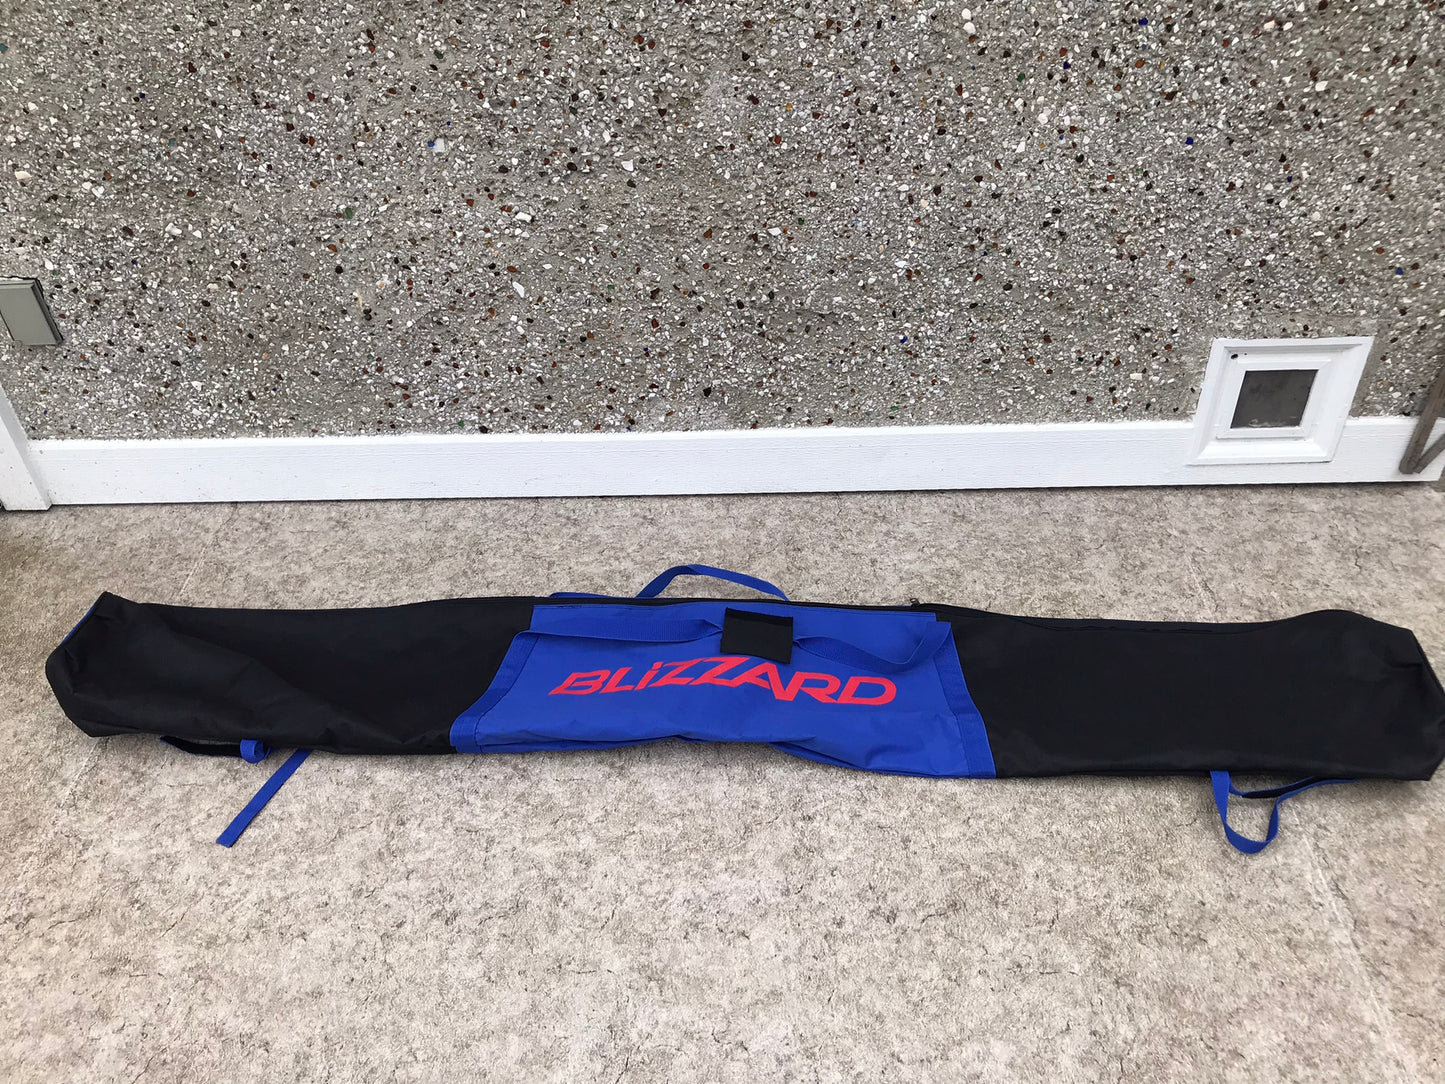 Ski Bag Blizzard Adult Size Fits Up To 183 cm Black Purple Excellent As New